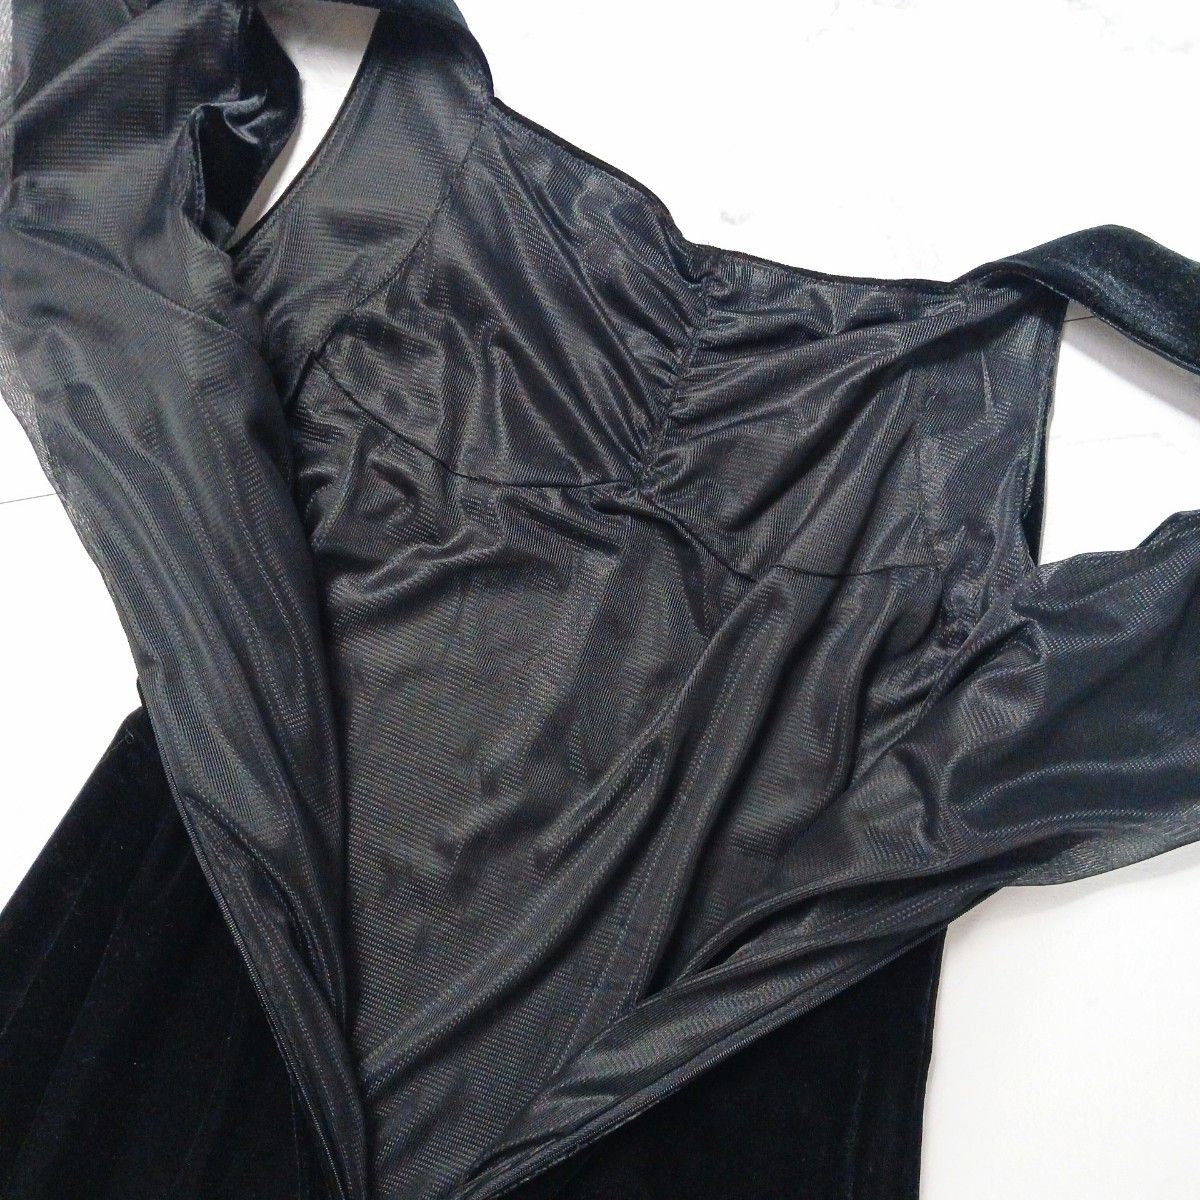 ROSA ロングドレス ベロア ベルベットドレス ブラック ファー 上質 ドレスワンピース ブラック